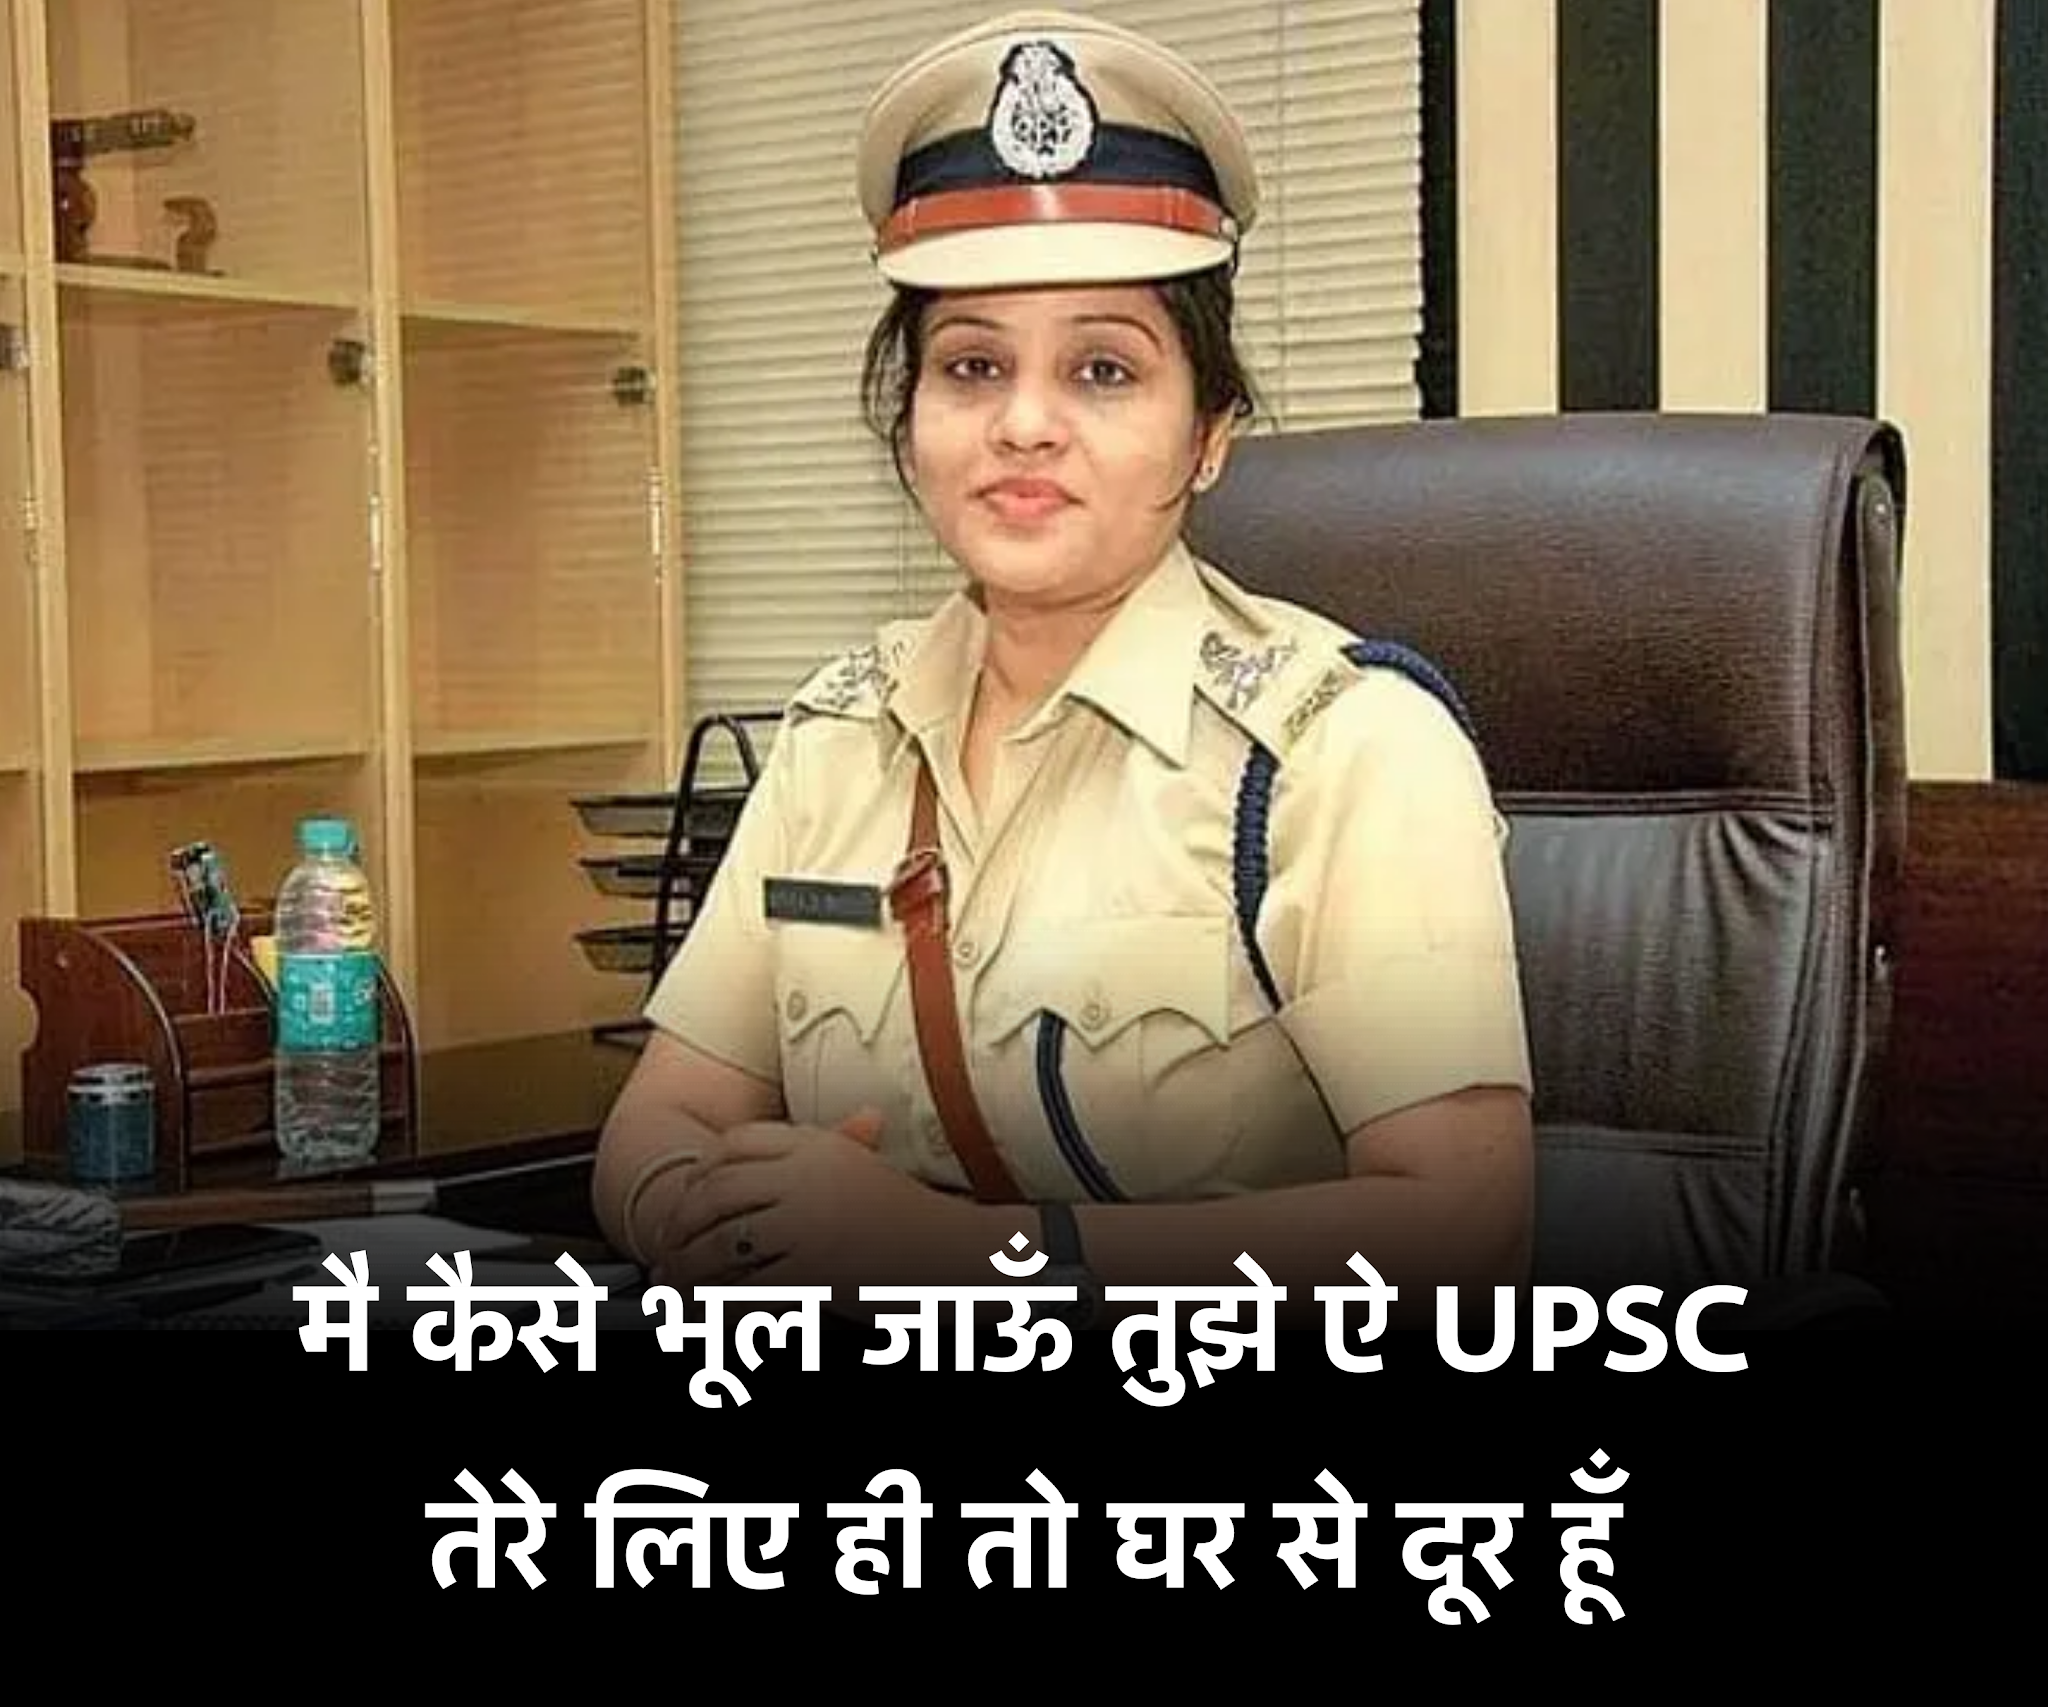 UPSC Motivation shayari in hindi, UPSC Motivation shayari, UPSC motivational status, UPSC Motivation shayari, UPSC motivational status, UPSC Shayari in hindi, UPSC Shayari, UPSC status in hindi